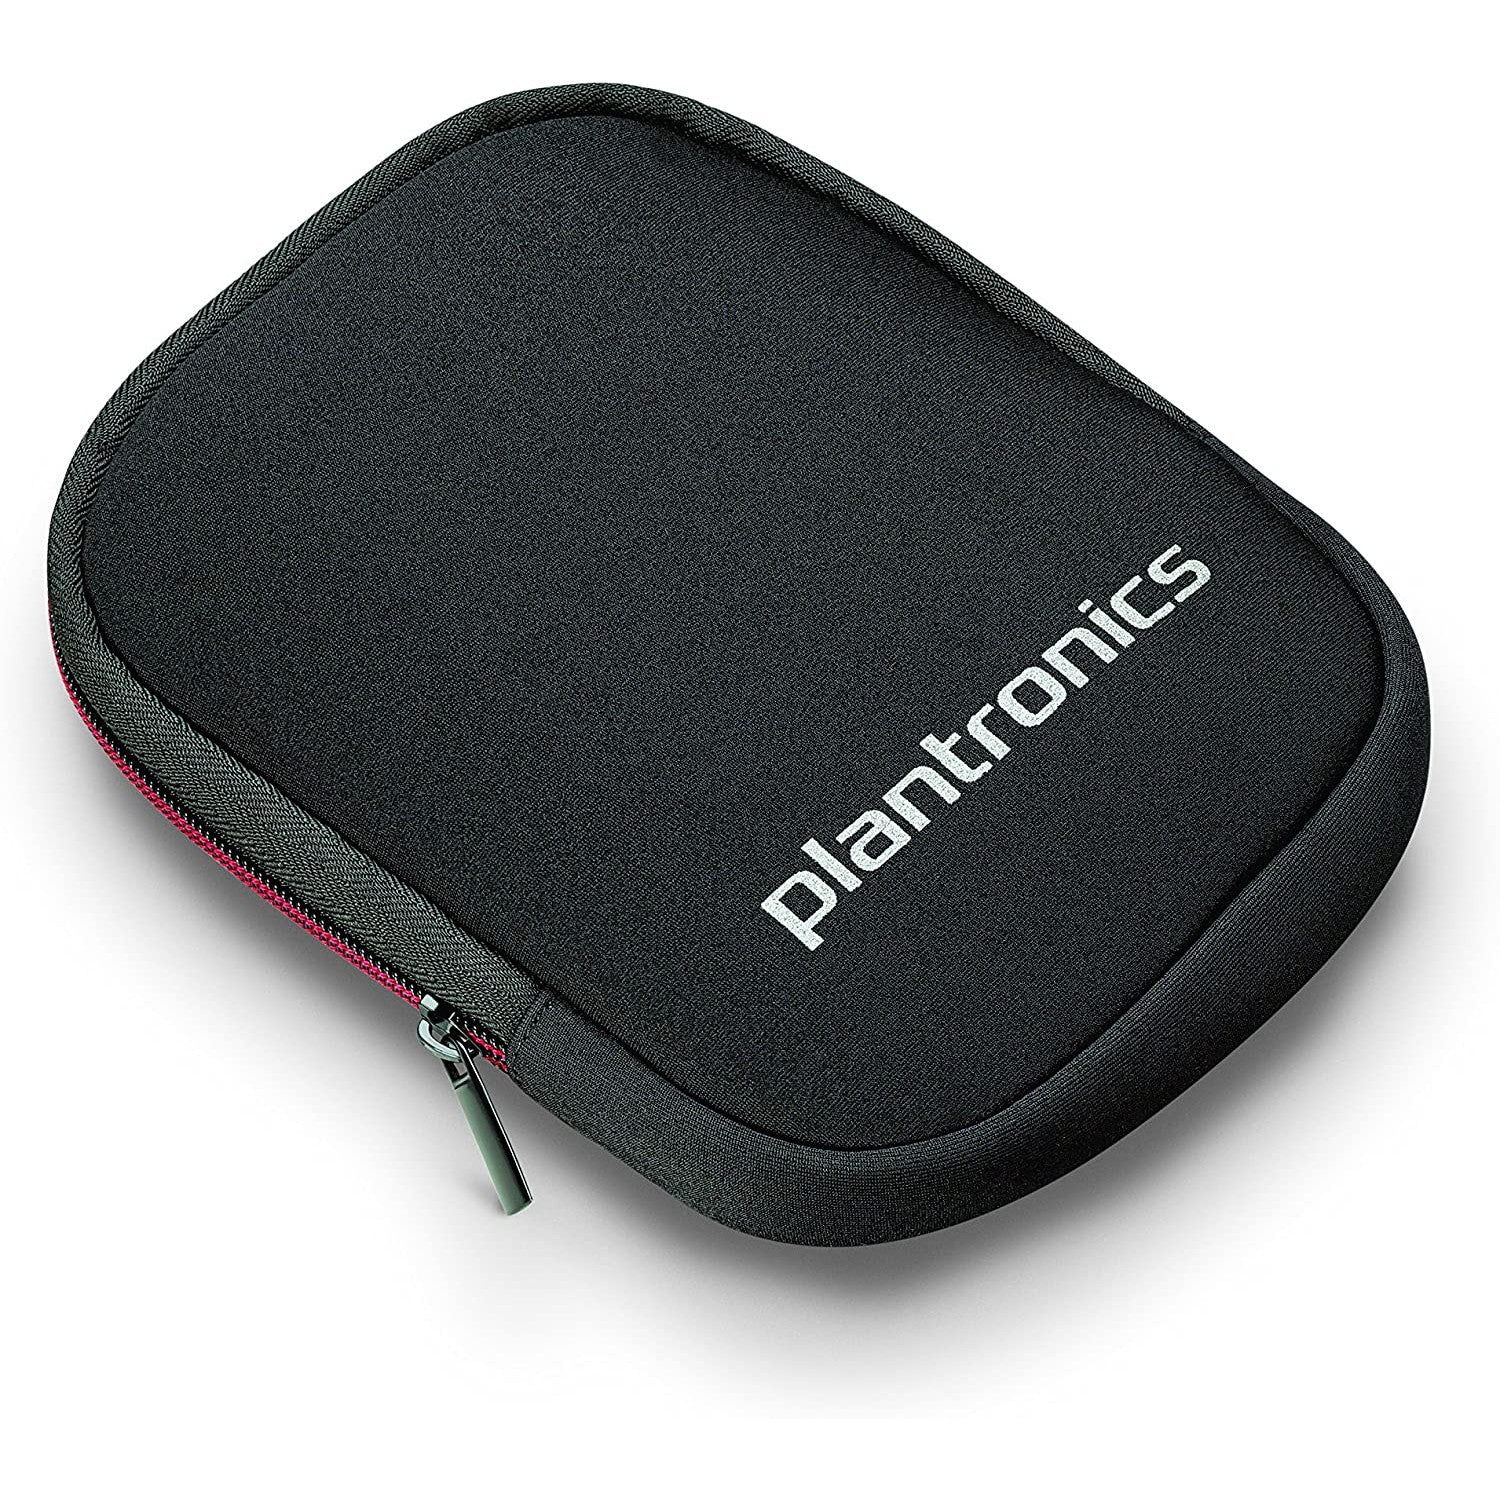 Plantronics Voyager Focus UC B825-M Stereo Bluetooth Headset - Black